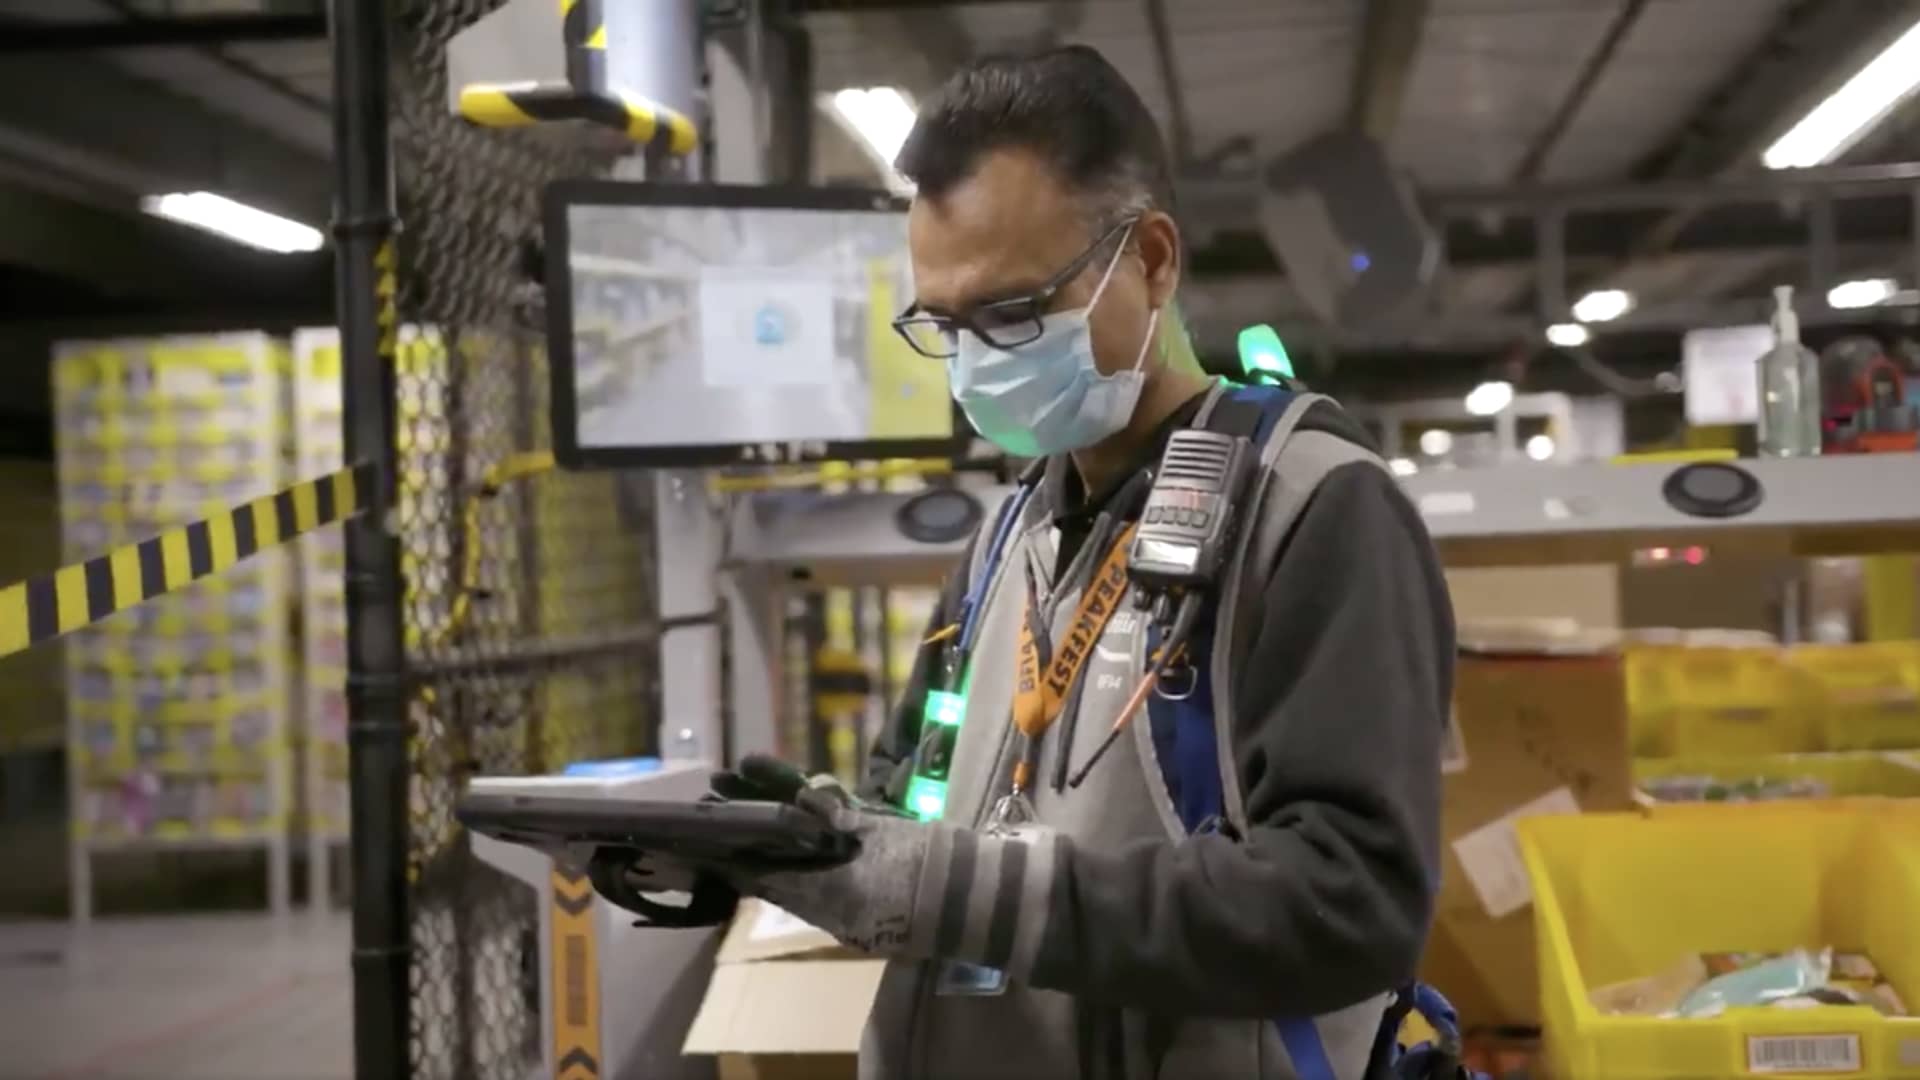 An Amazon worker inside a warehouse during coronavirus pandemic